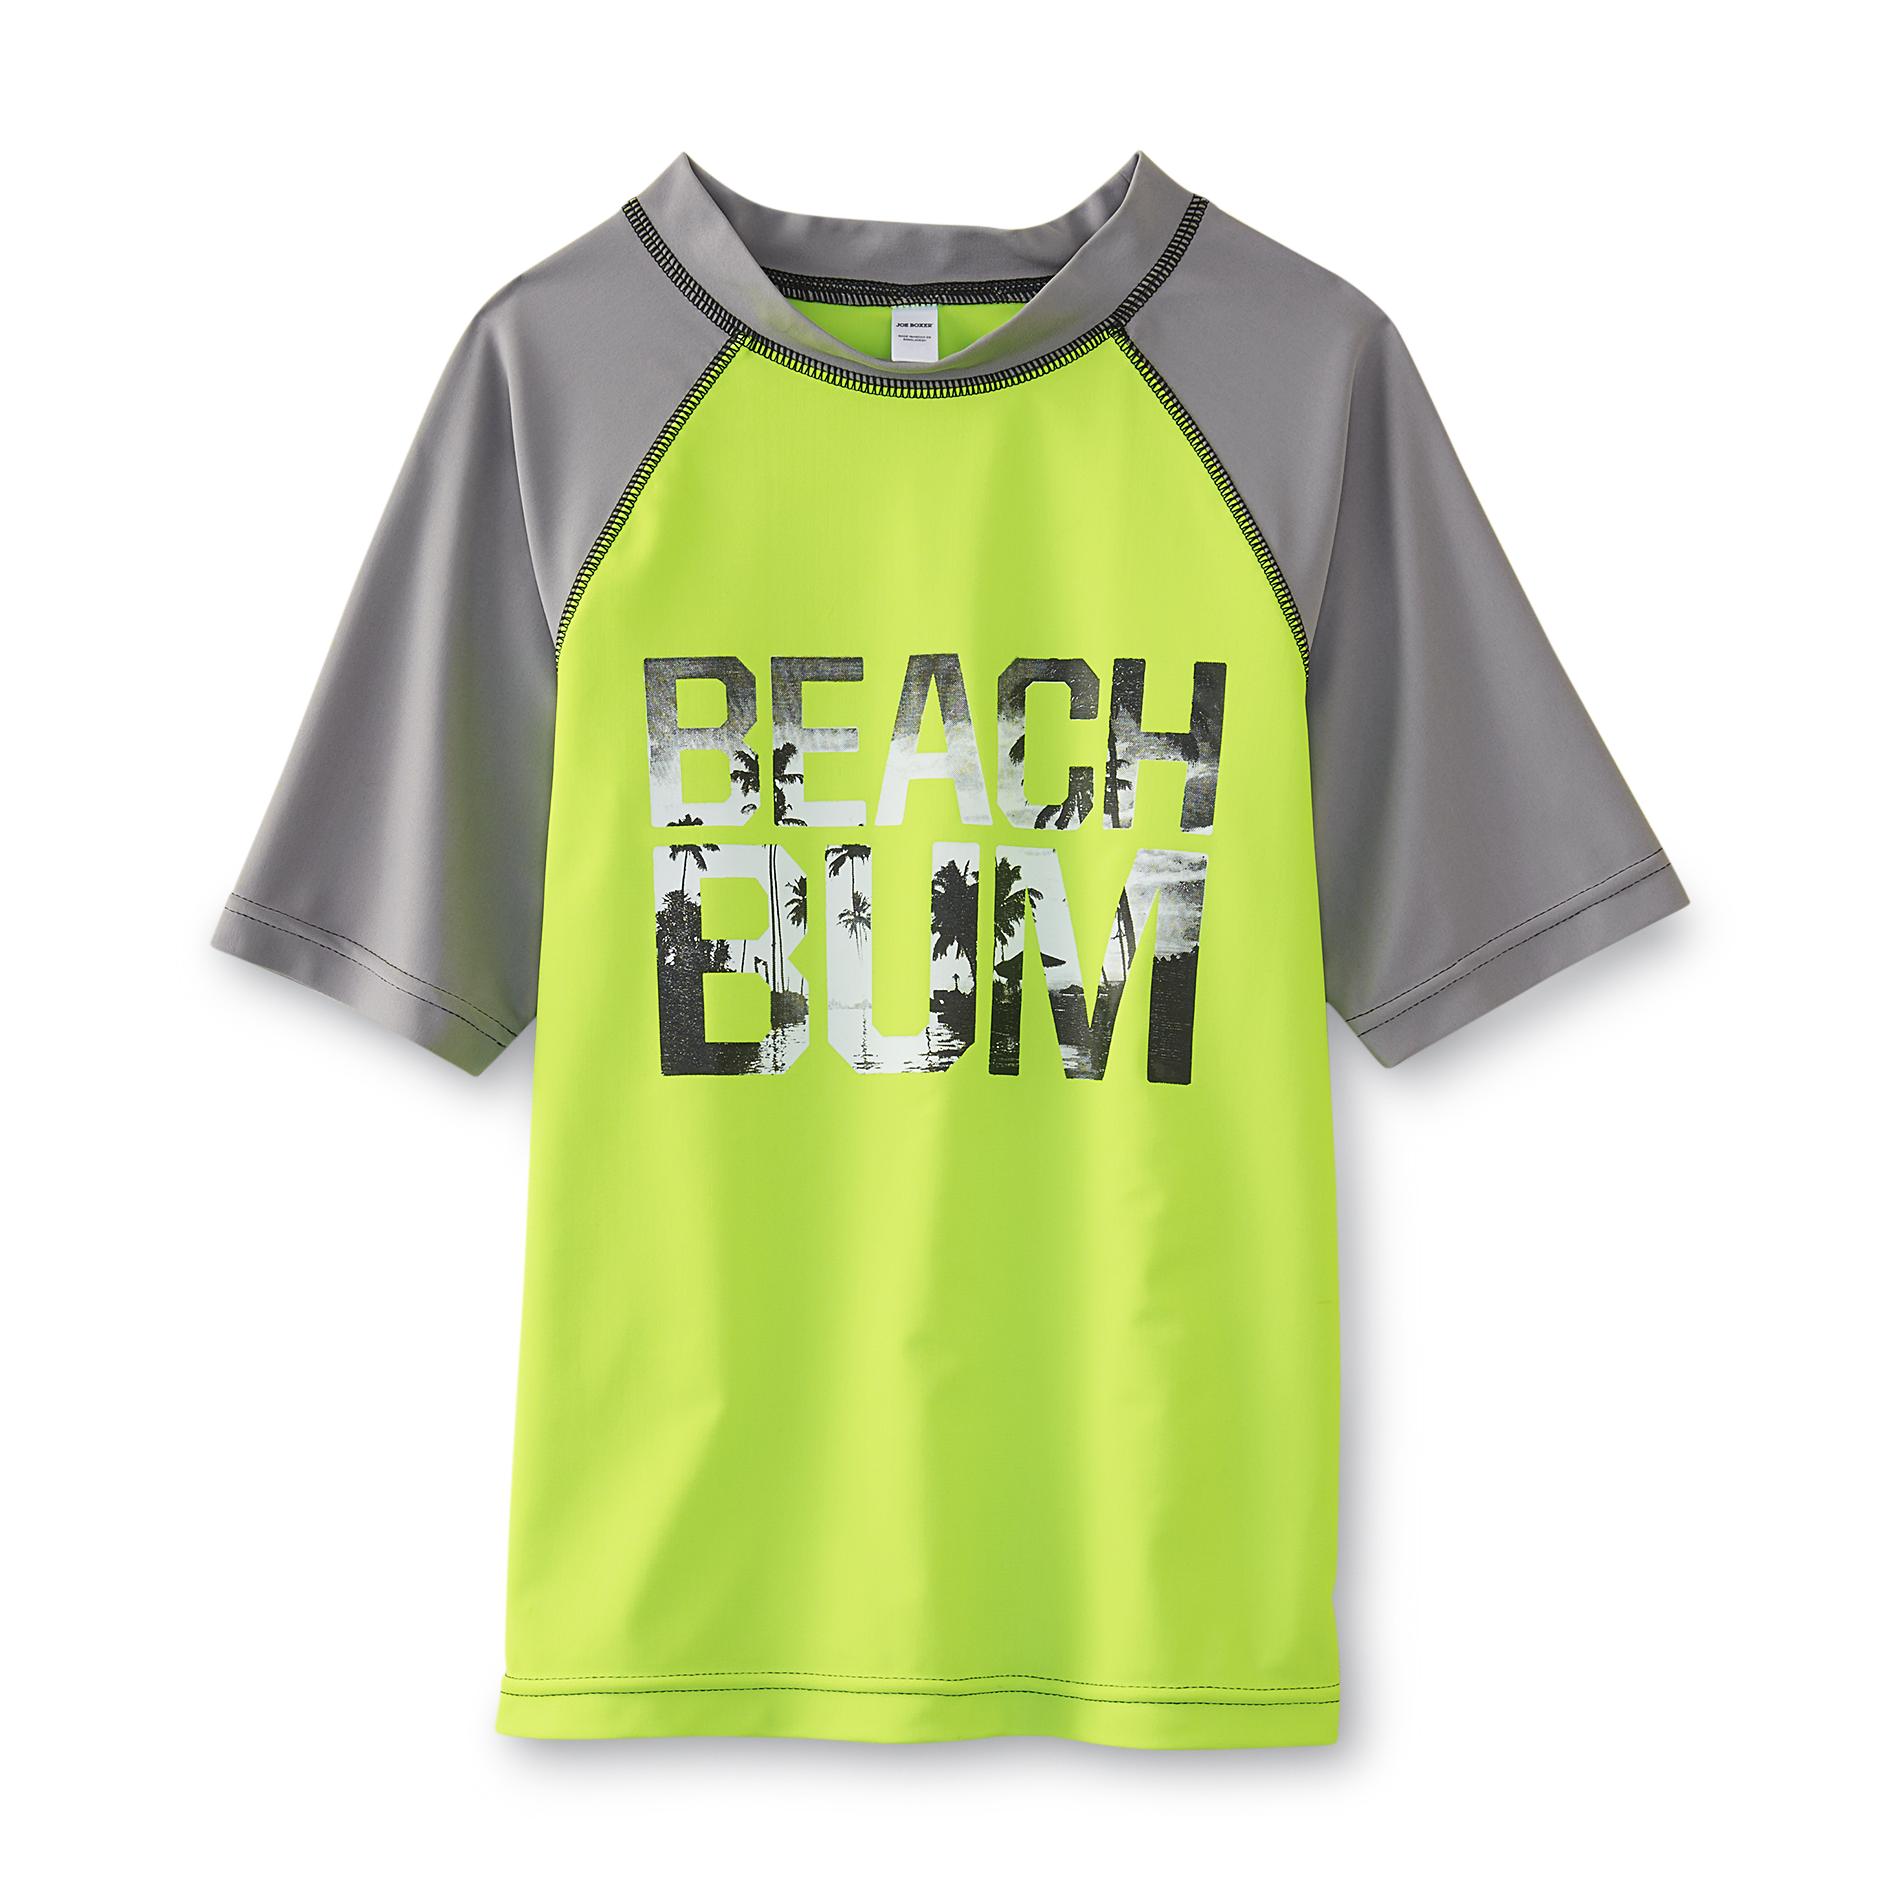 Boy's Raglan Rashguard T-Shirt - Beach Bum